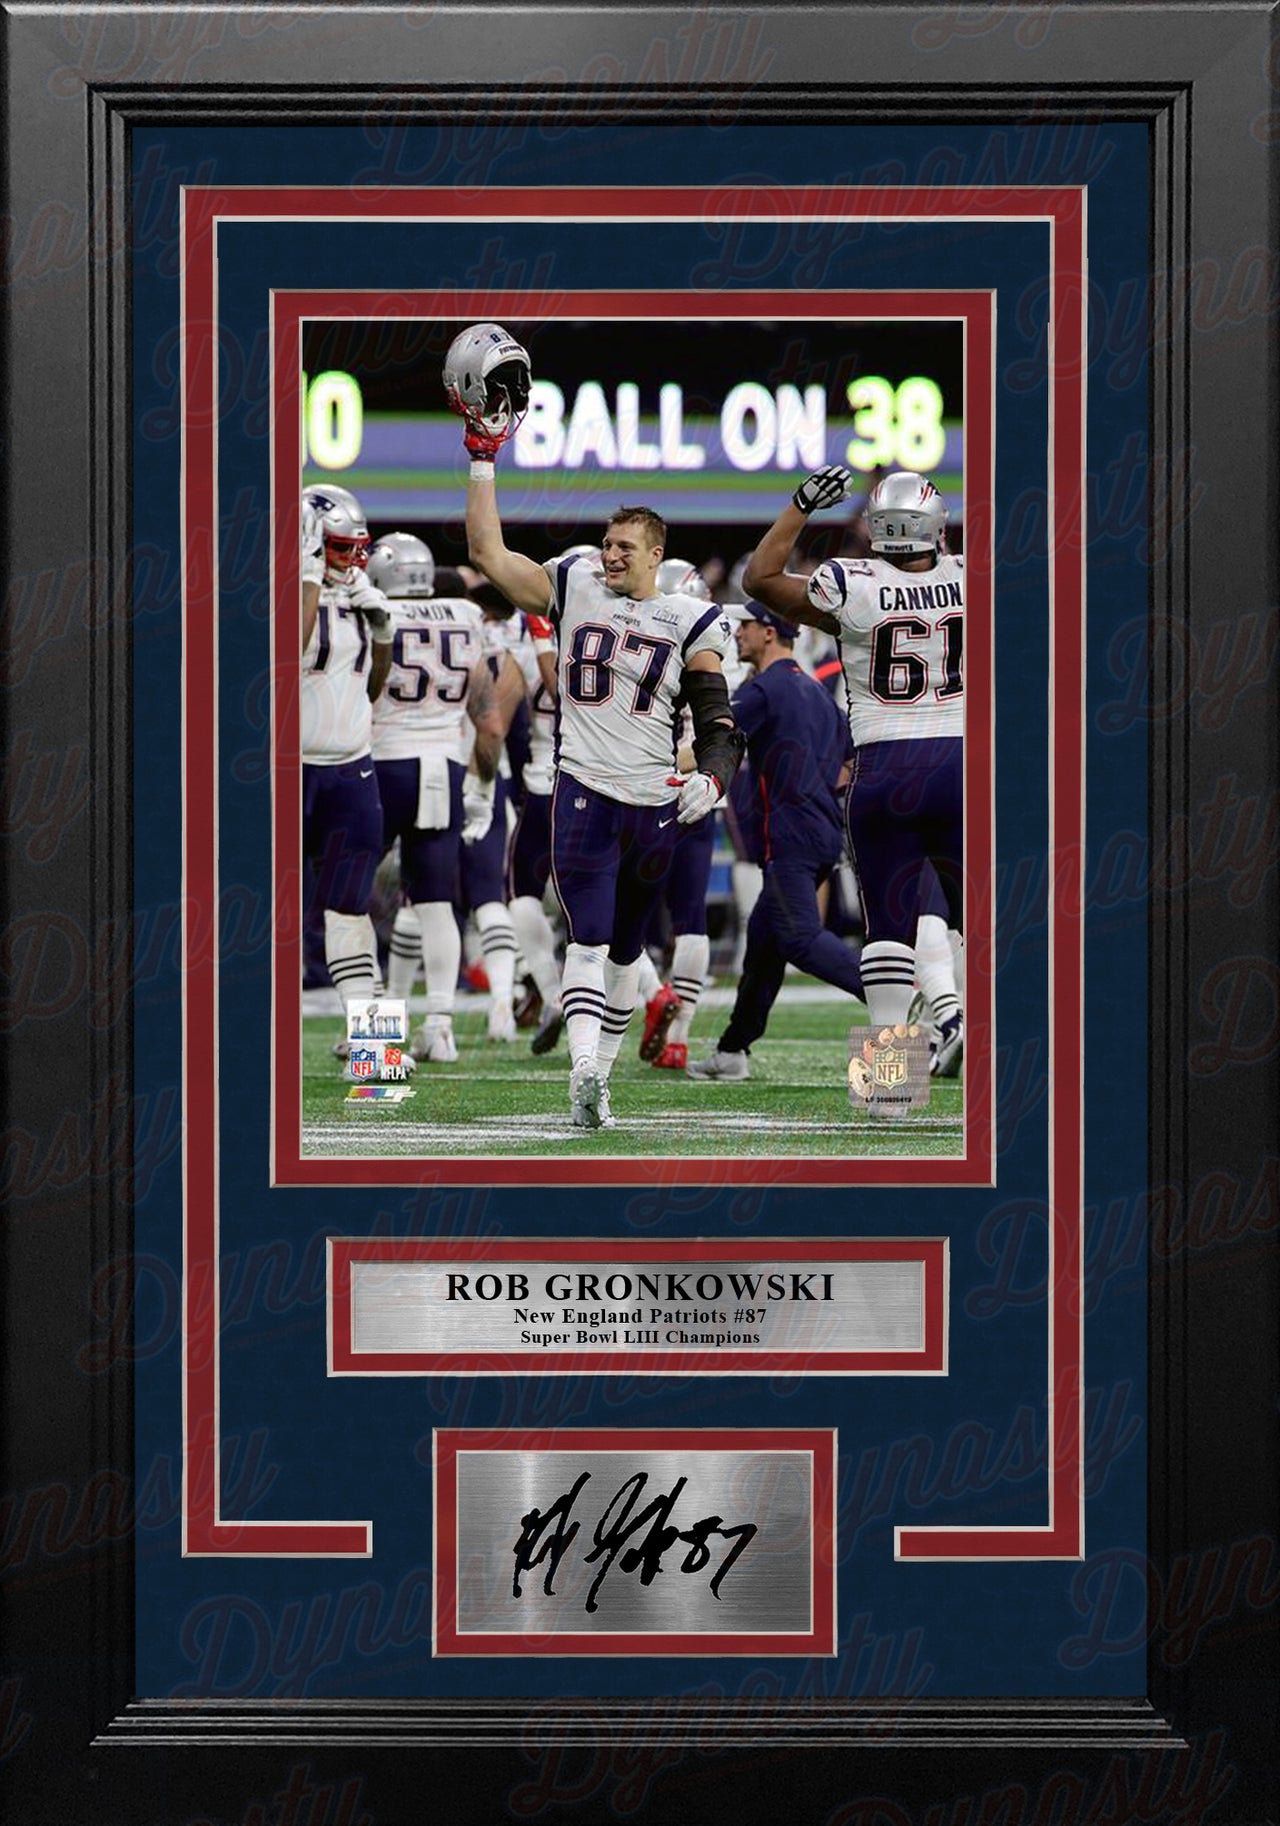 Rob Gronkowski Celebration SB LIII New England Patriots 8x10 Framed Photo with Engraved Autograph - Dynasty Sports & Framing 